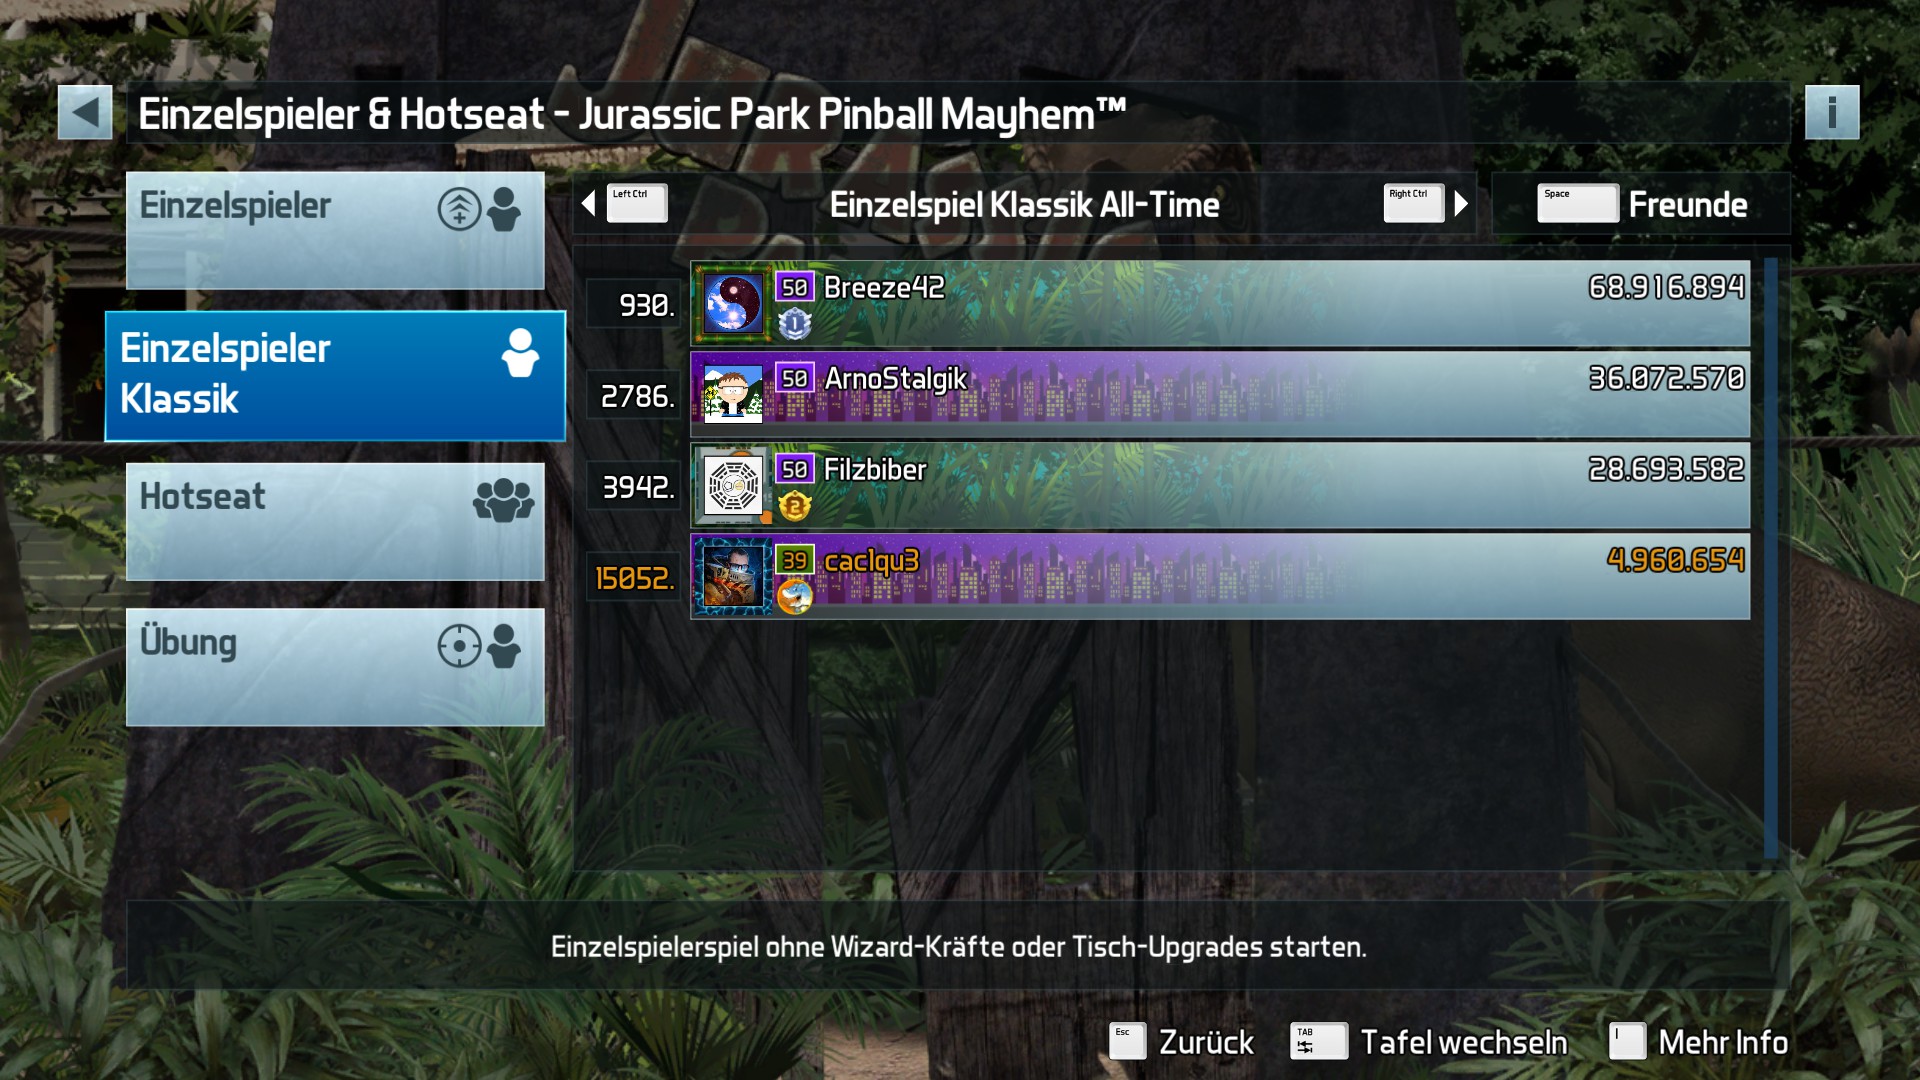 e2e4: Pinball FX3: Jurassic Park Pinball Mayhem [Classic] (PC) 4,960,654 points on 2022-05-15 18:09:39